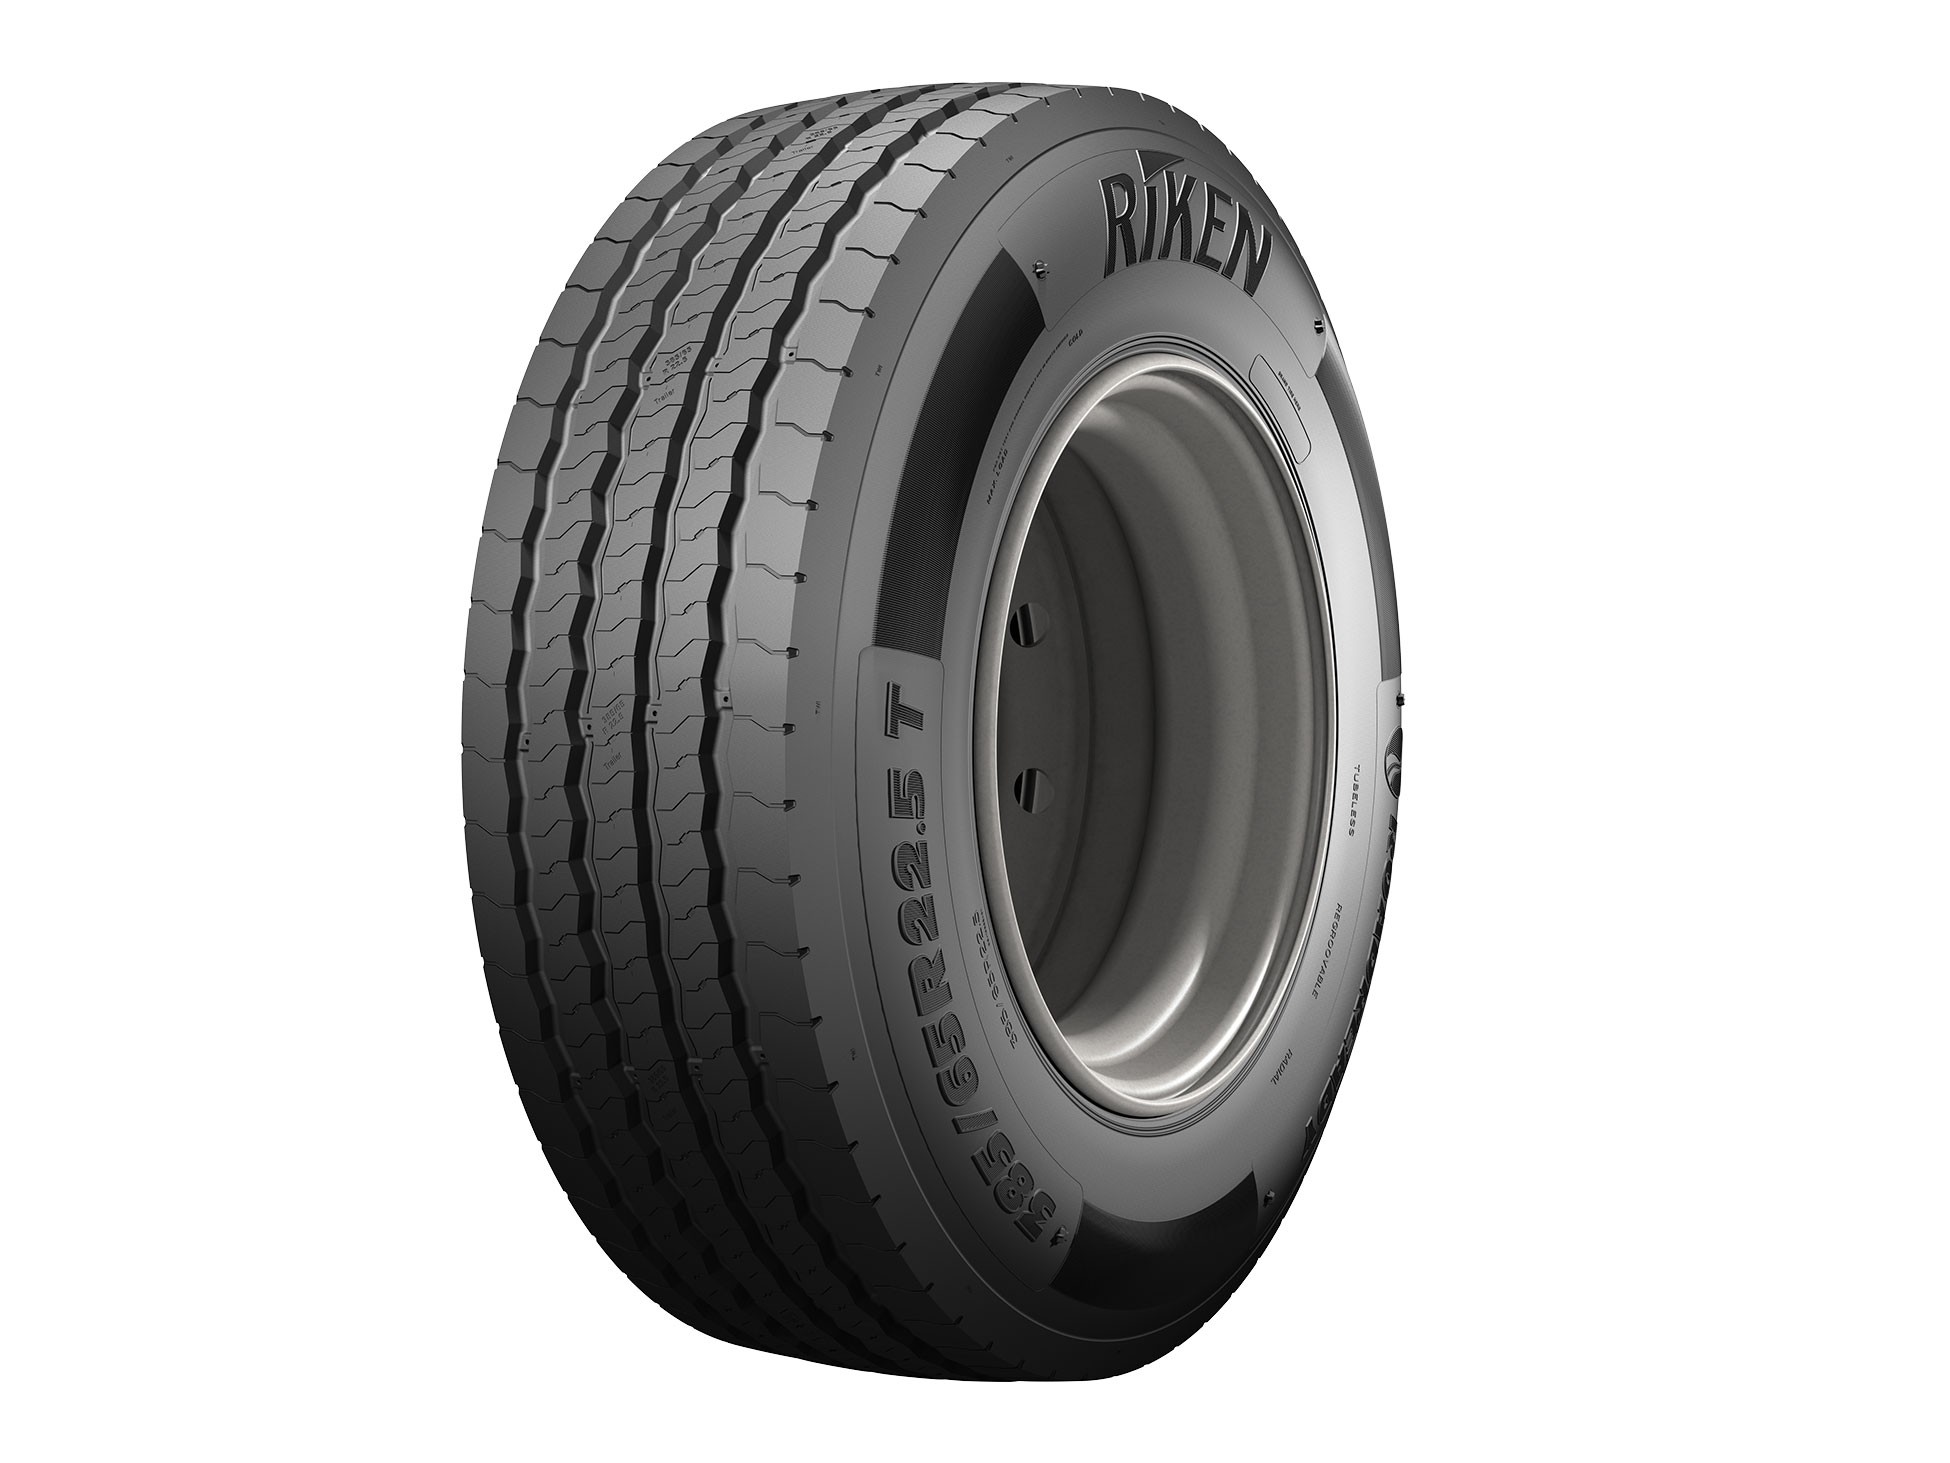 Gomme Nuove Riken 215/75 R17.5 135/133J ROAD READY T M+S (8.00mm) pneumatici nuovi Estivo